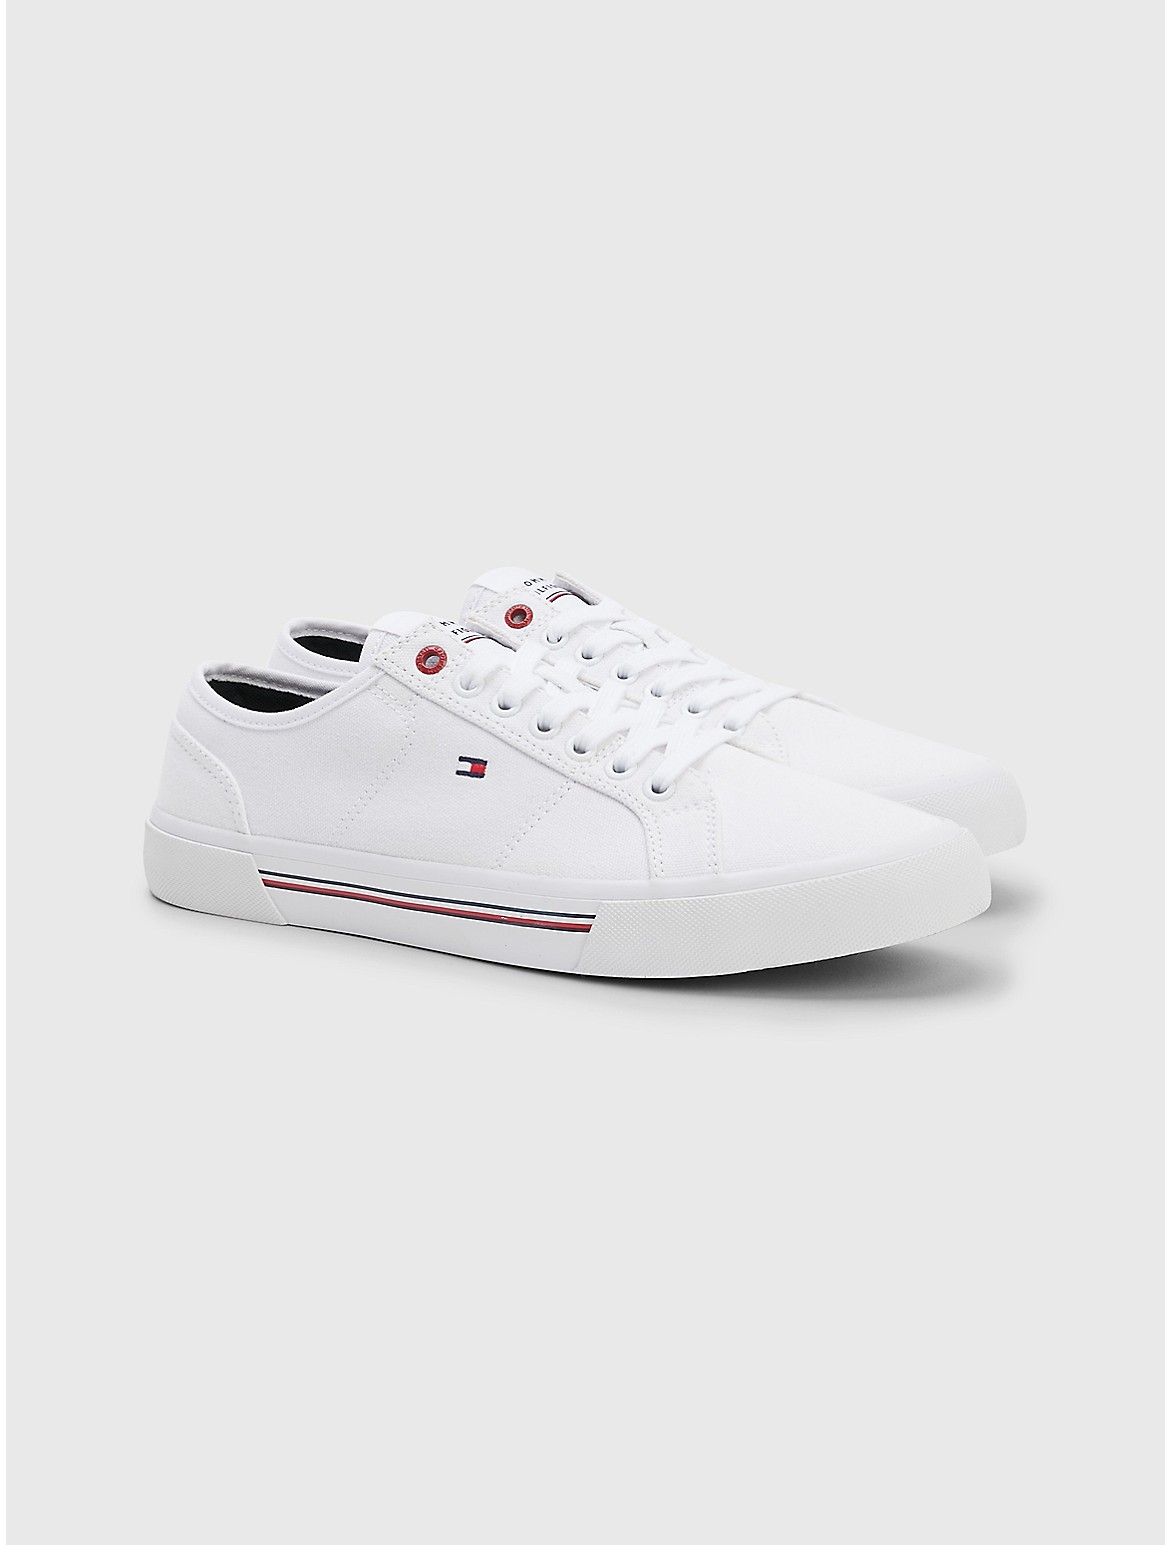 Tommy Hilfiger Men's Flag Sneaker - White - 10